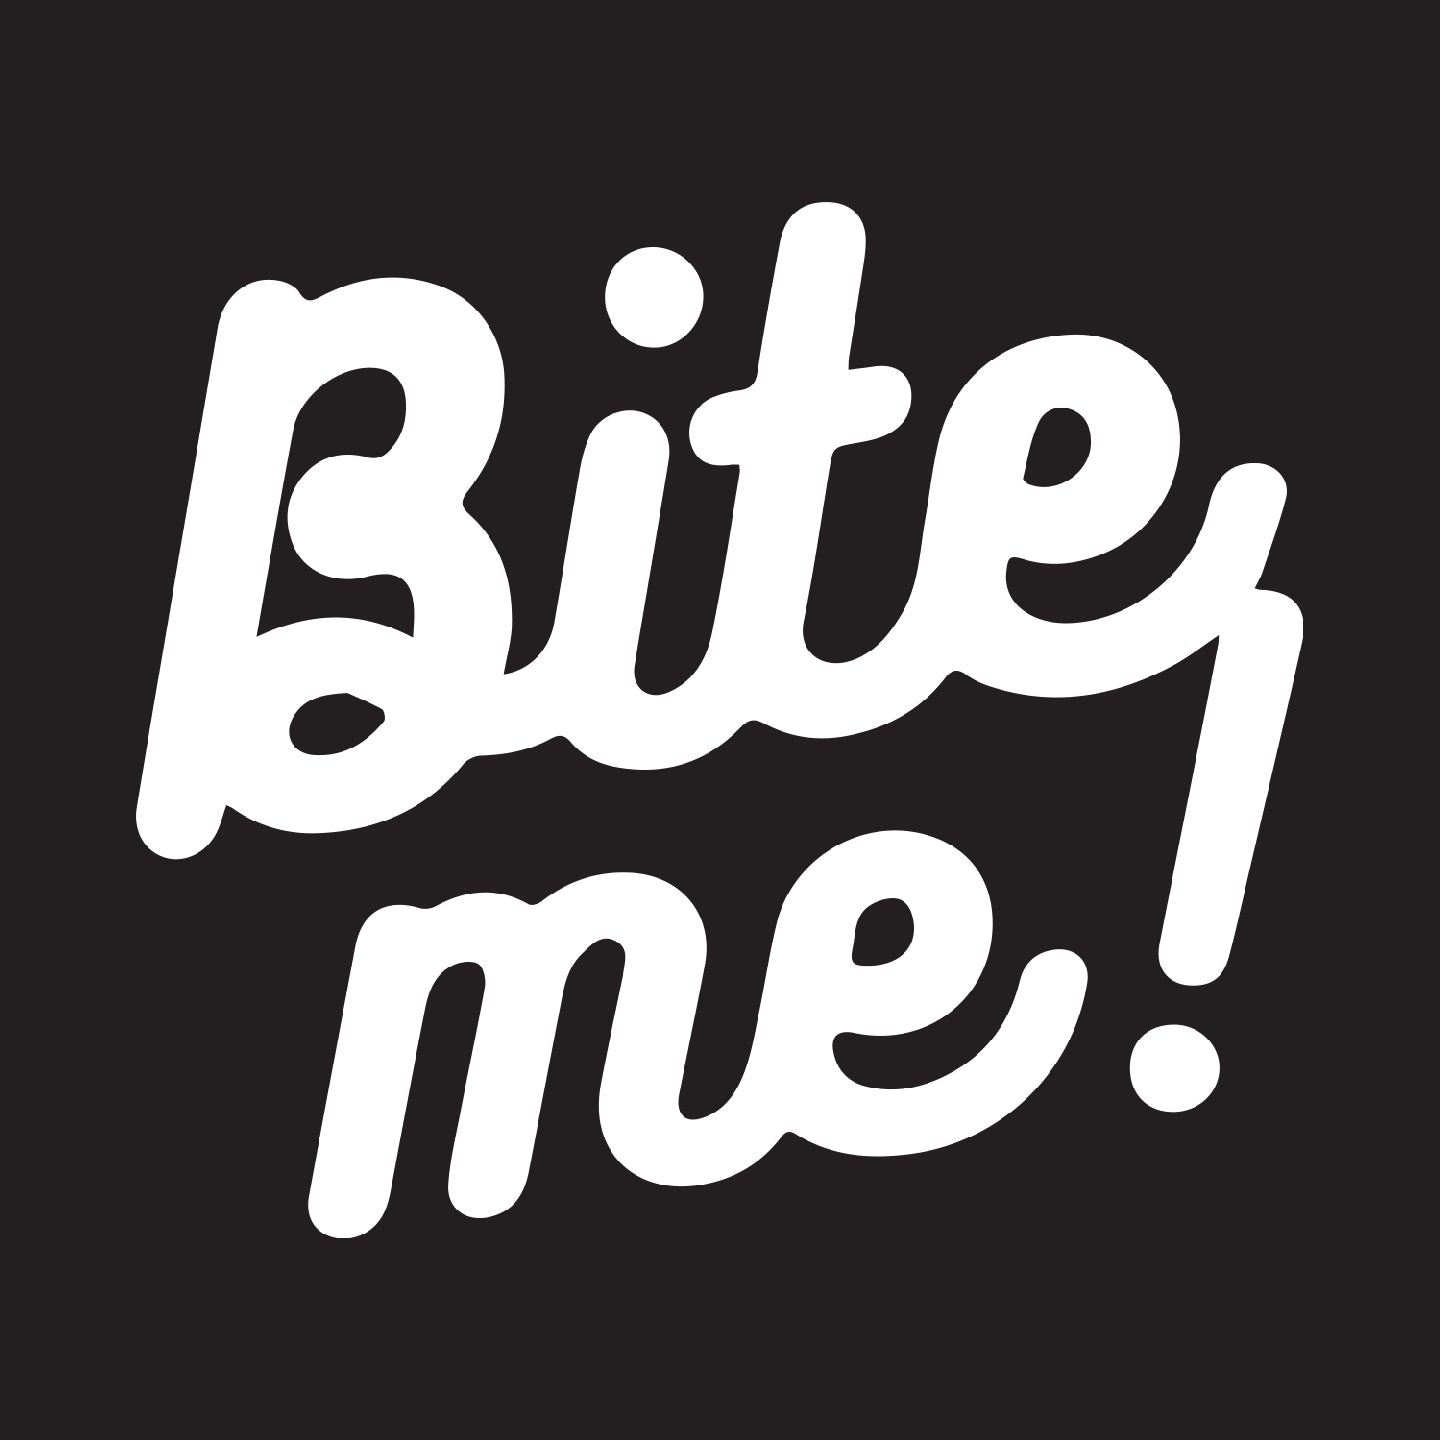 Bite me!